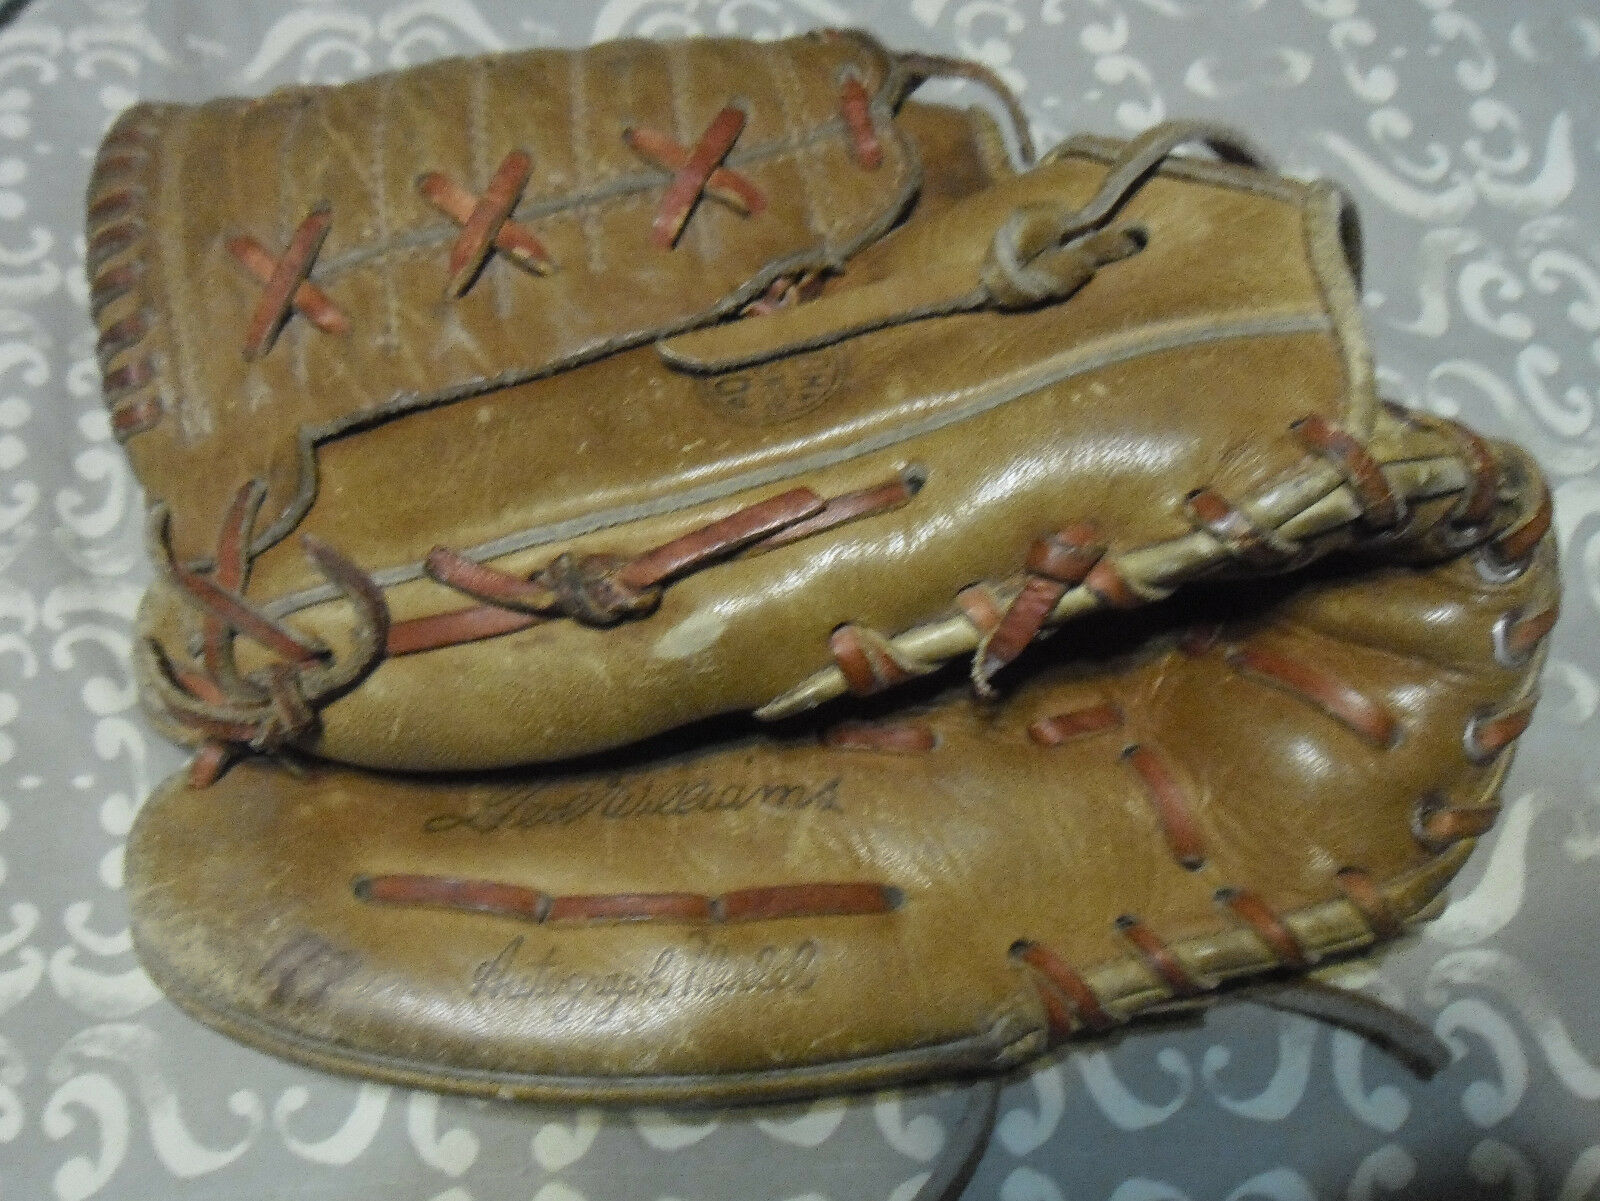 Vintage Ted Williams Baseball Glove Mitt Lht Sears Roebuck Autograph Model 1677